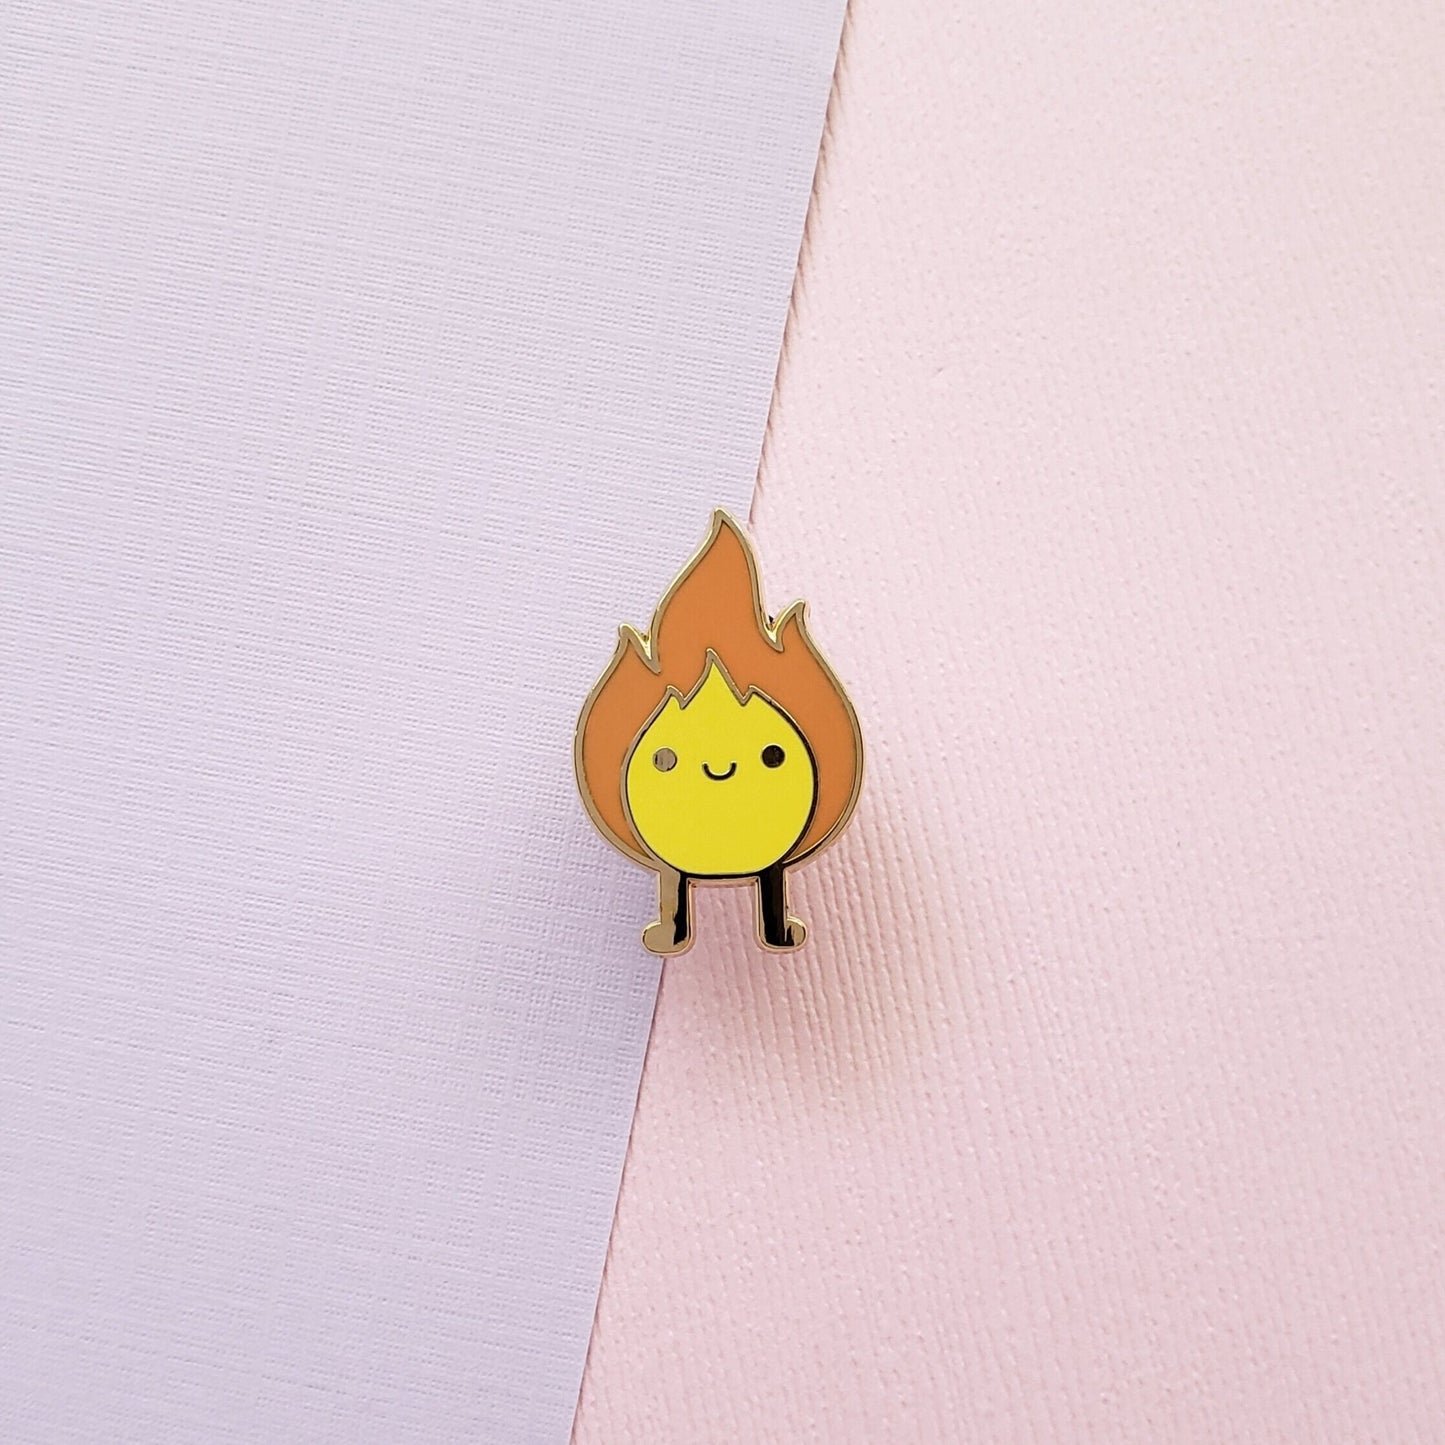 Fire Spirit enamel pin